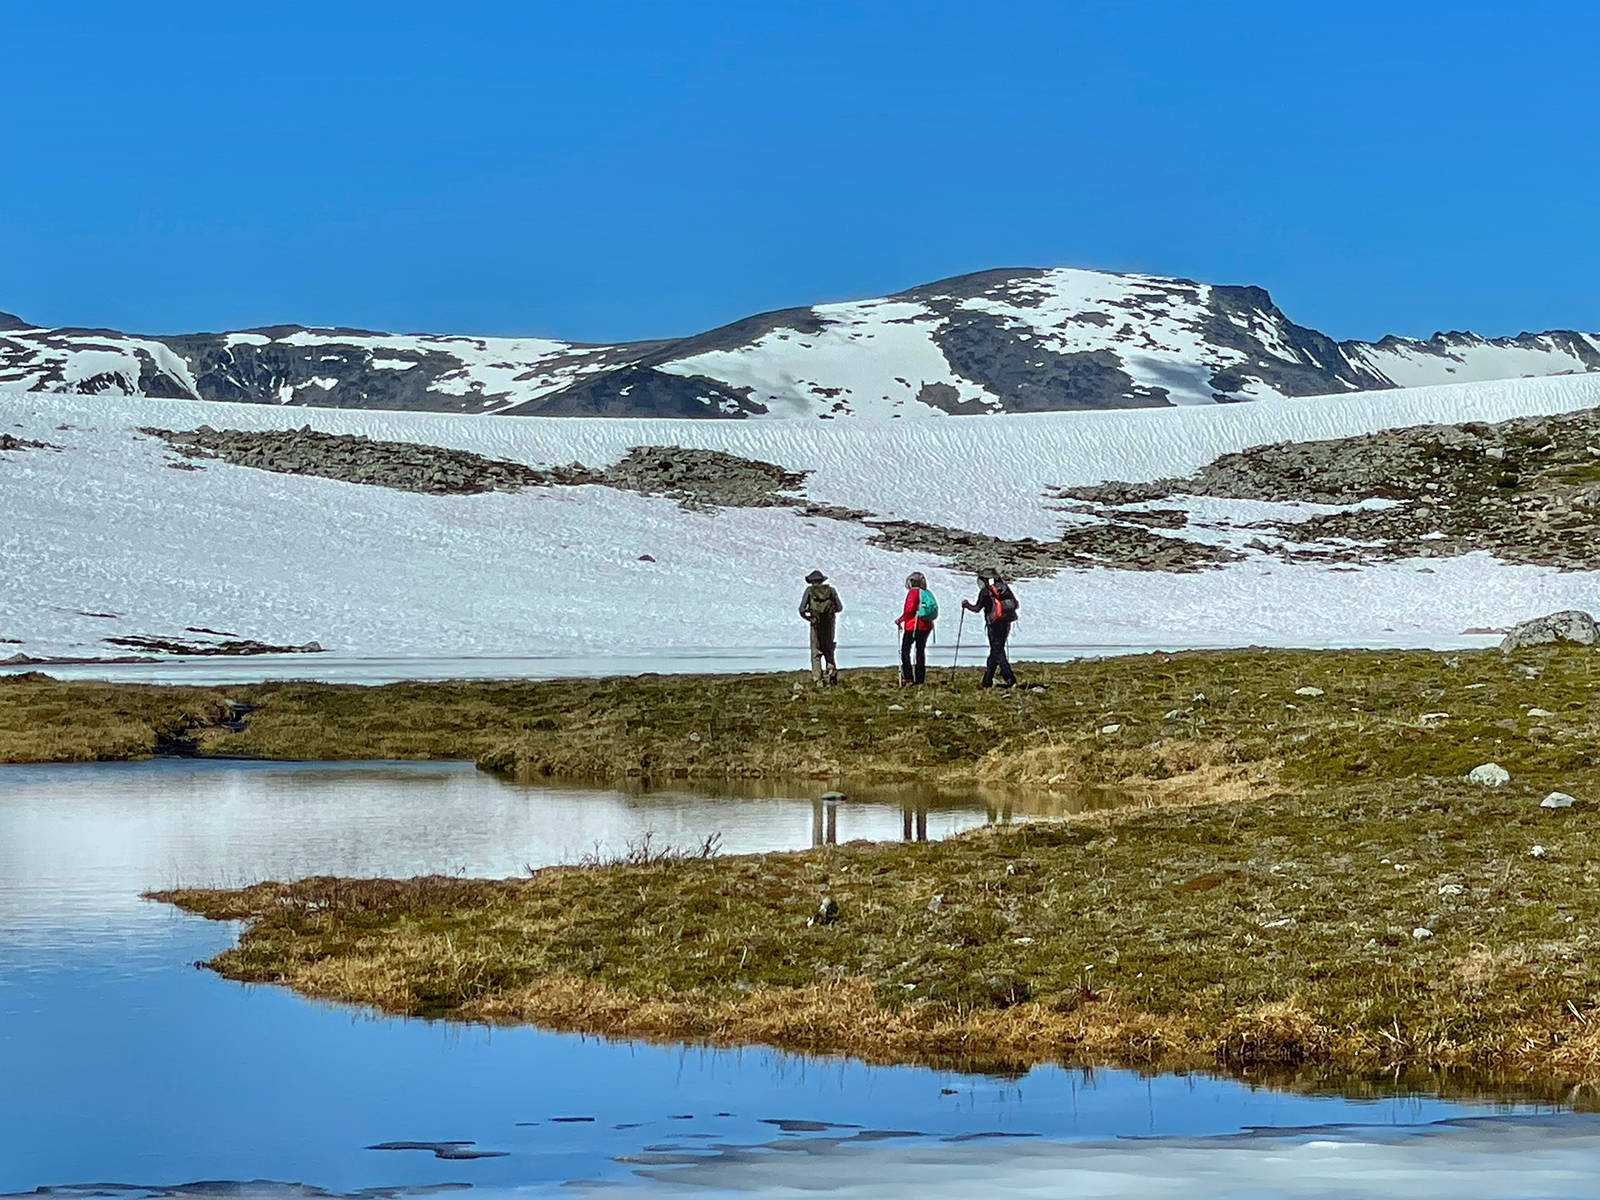 Nuk Tessli offers daily guided hikes to mesmerizing peaks, flower-filled bowls and epic mountain lakes. @PowderMatt (Matt Mosteller) photo